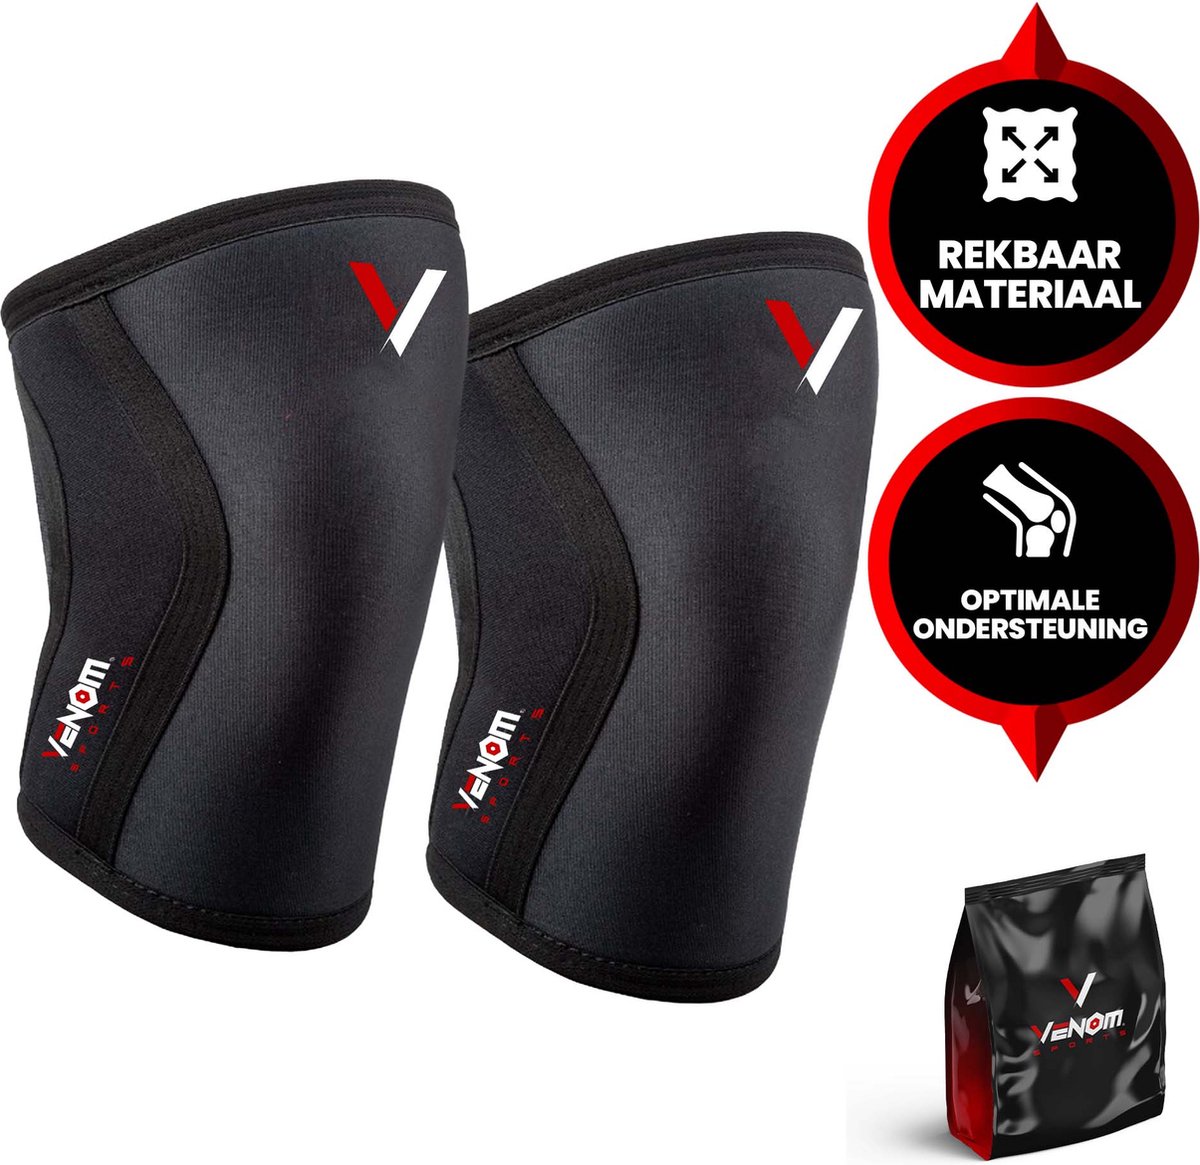 Venom Sports Knee wraps – knieband - knee sleeves voor extra stevigheid – knee sleeves powerlifting – kniebrace voor spieren en gewrichten – zwart – maat XL - 1 paar